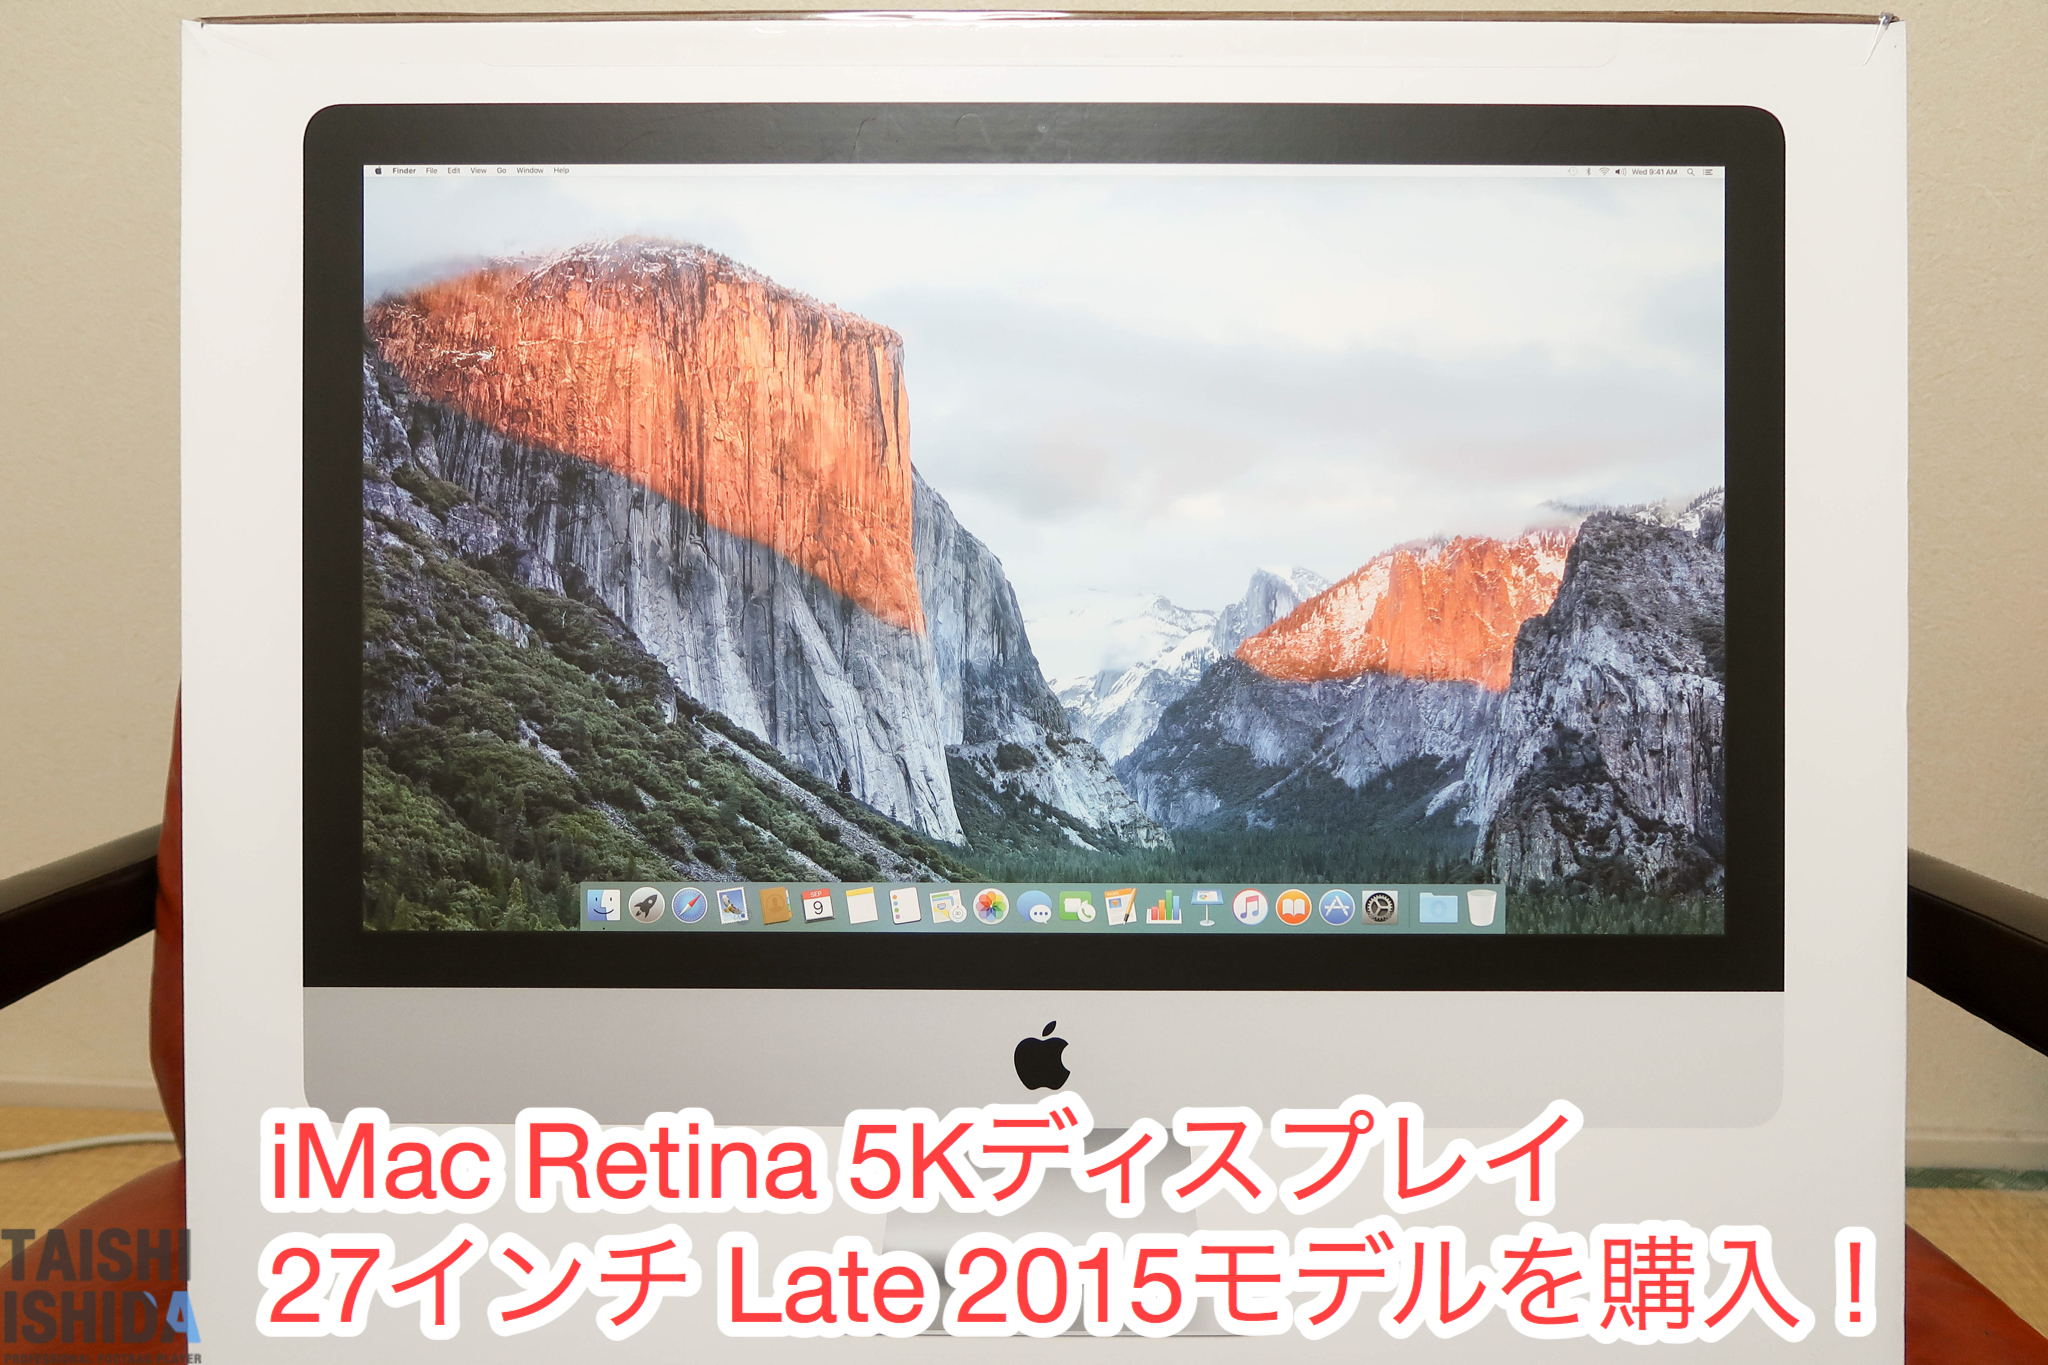 iMac late 2015 / Retinaディスプレイ27インチ